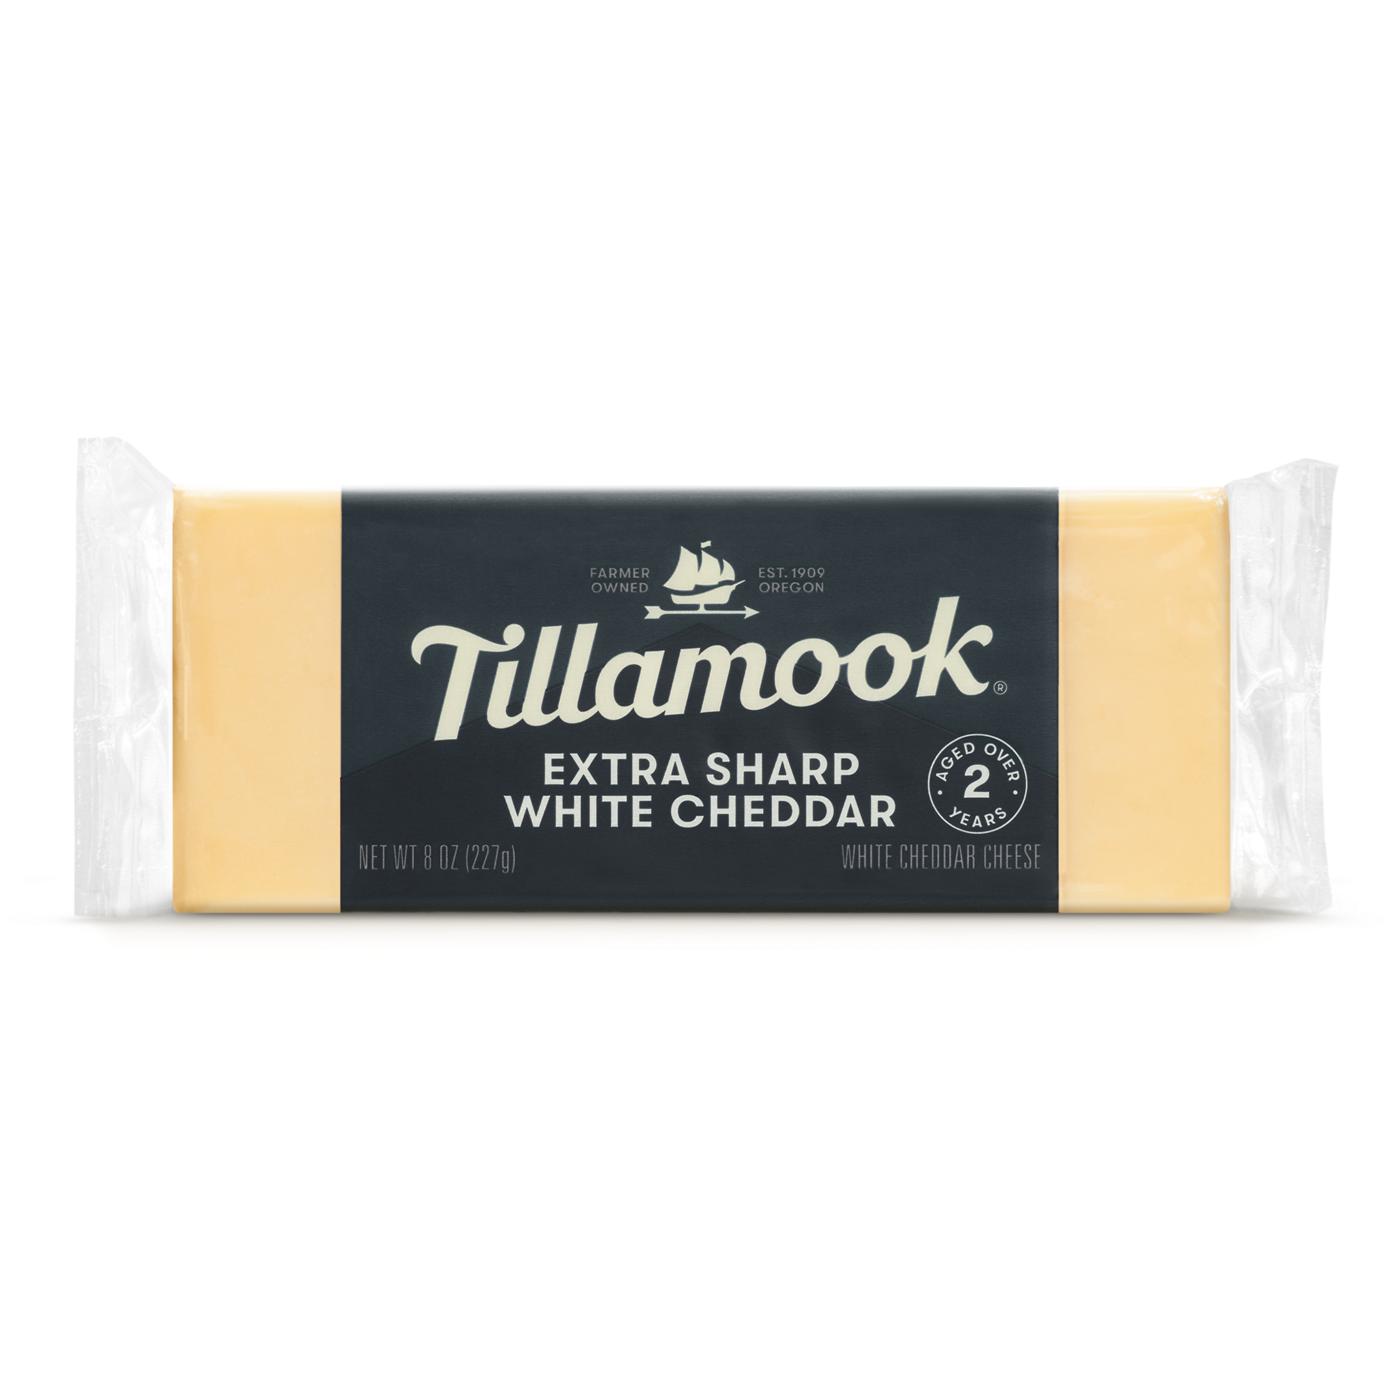 Tillamook Extra Sharp White Cheddar Cheese; image 1 of 5